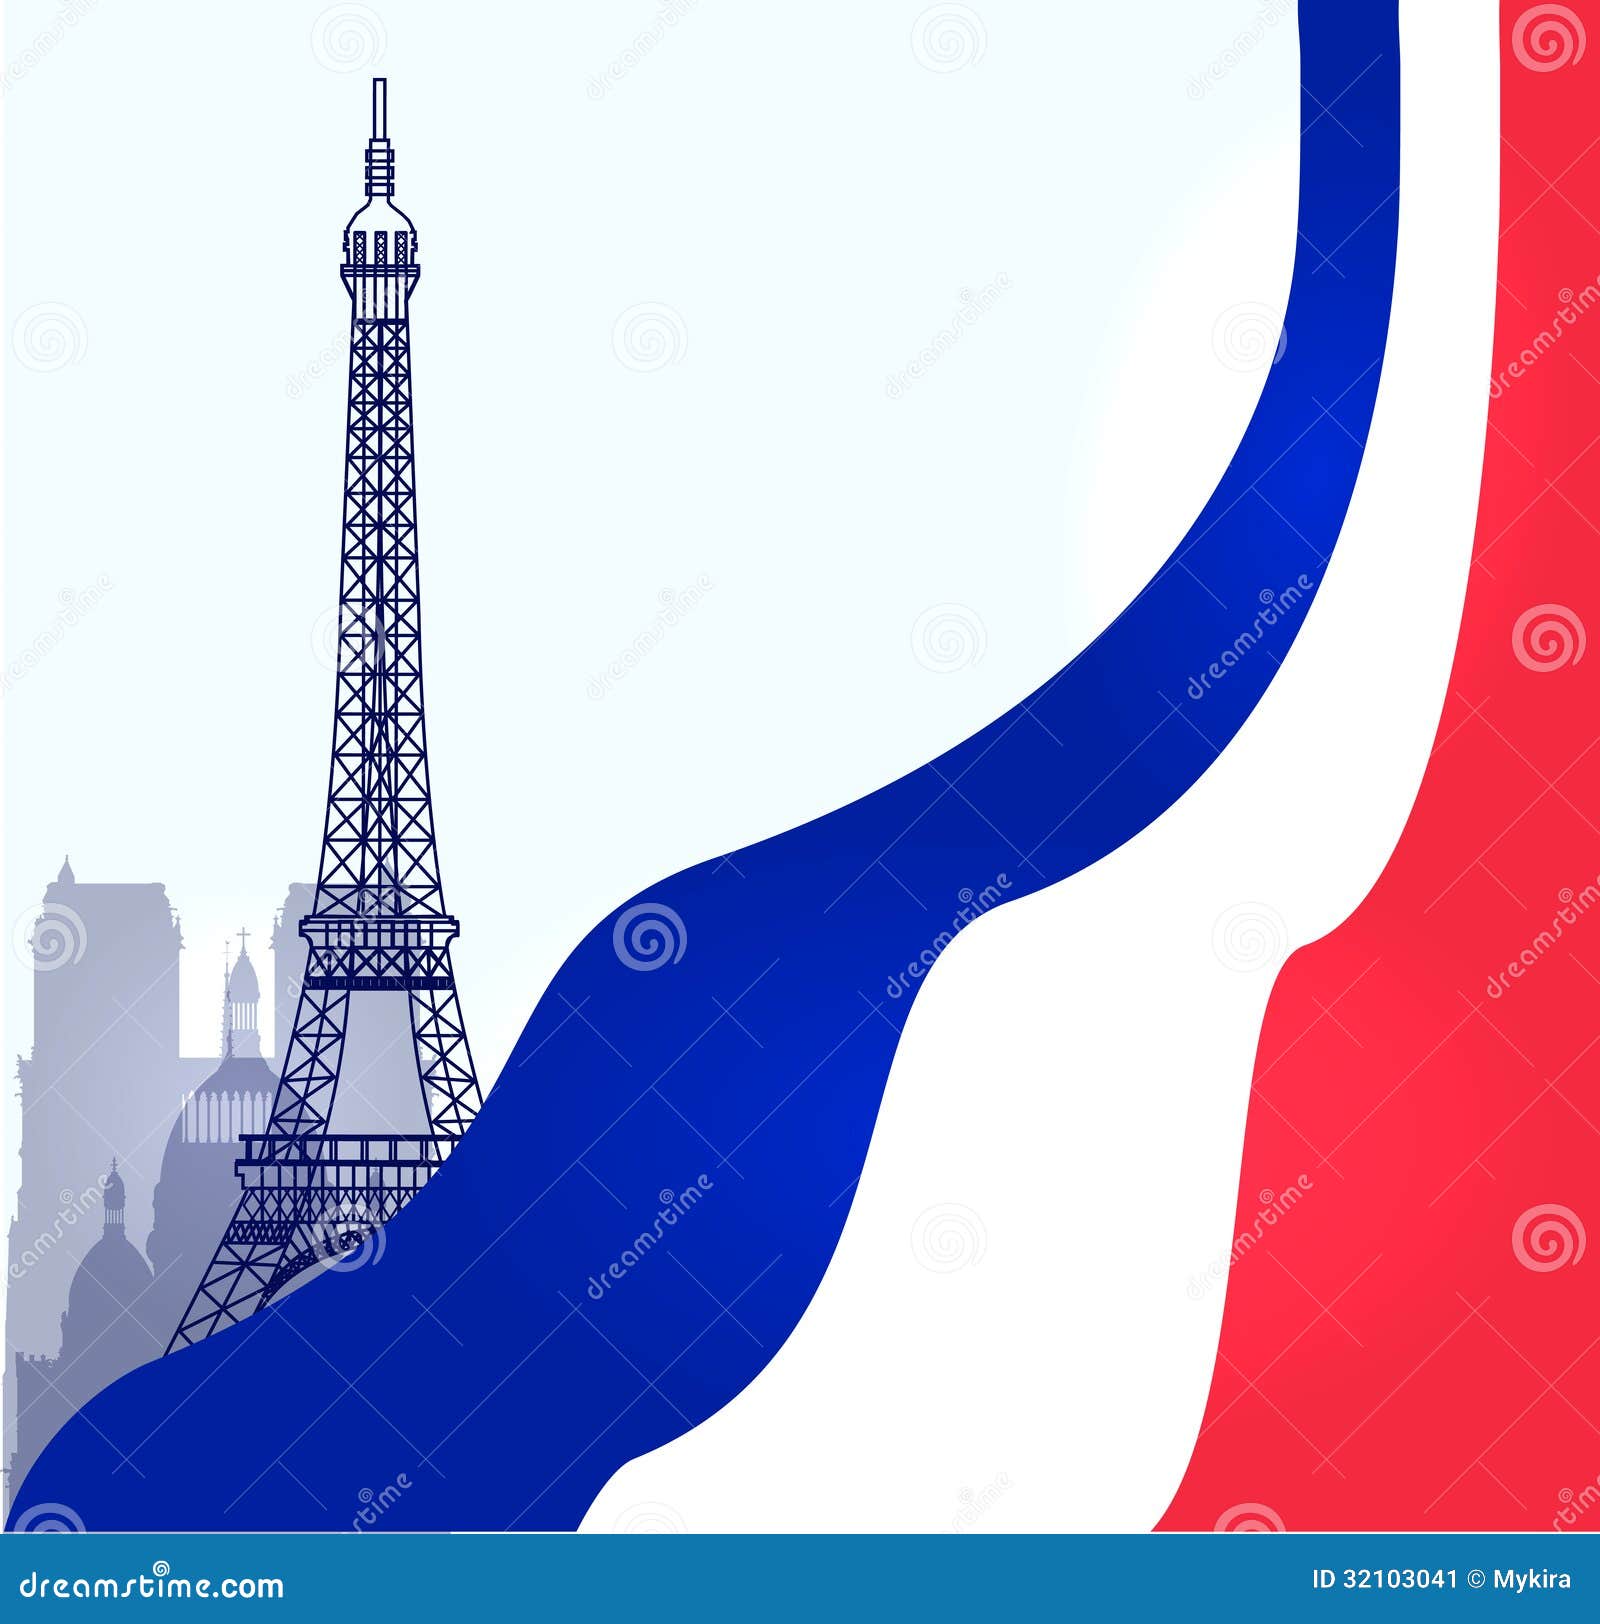 clipart bandiera francese - photo #46